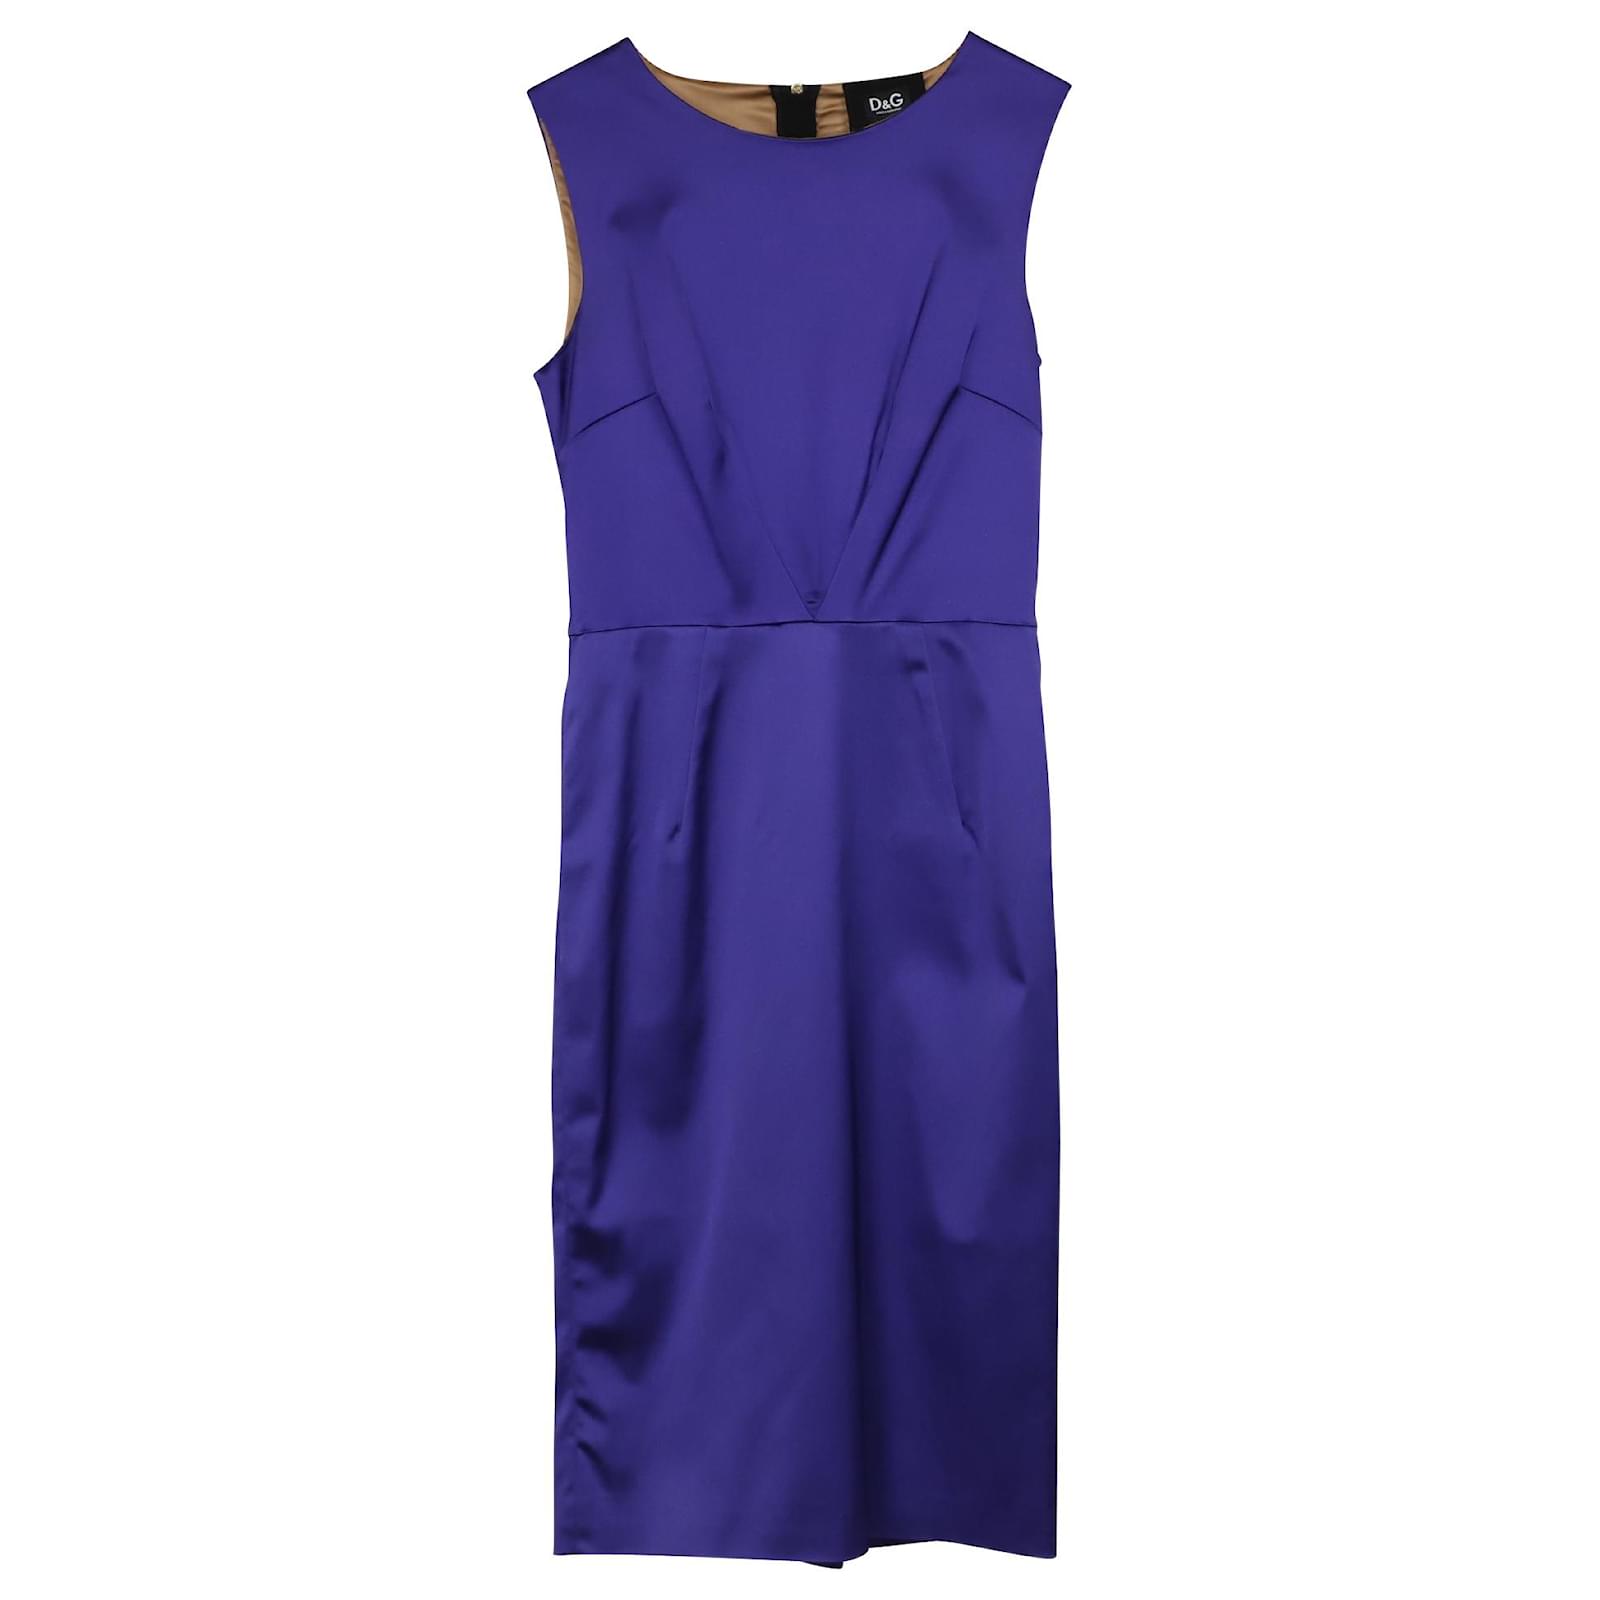 Dolce & Gabbana Sleeveless Sheath Dress in Purple Satin Acetate ref ...